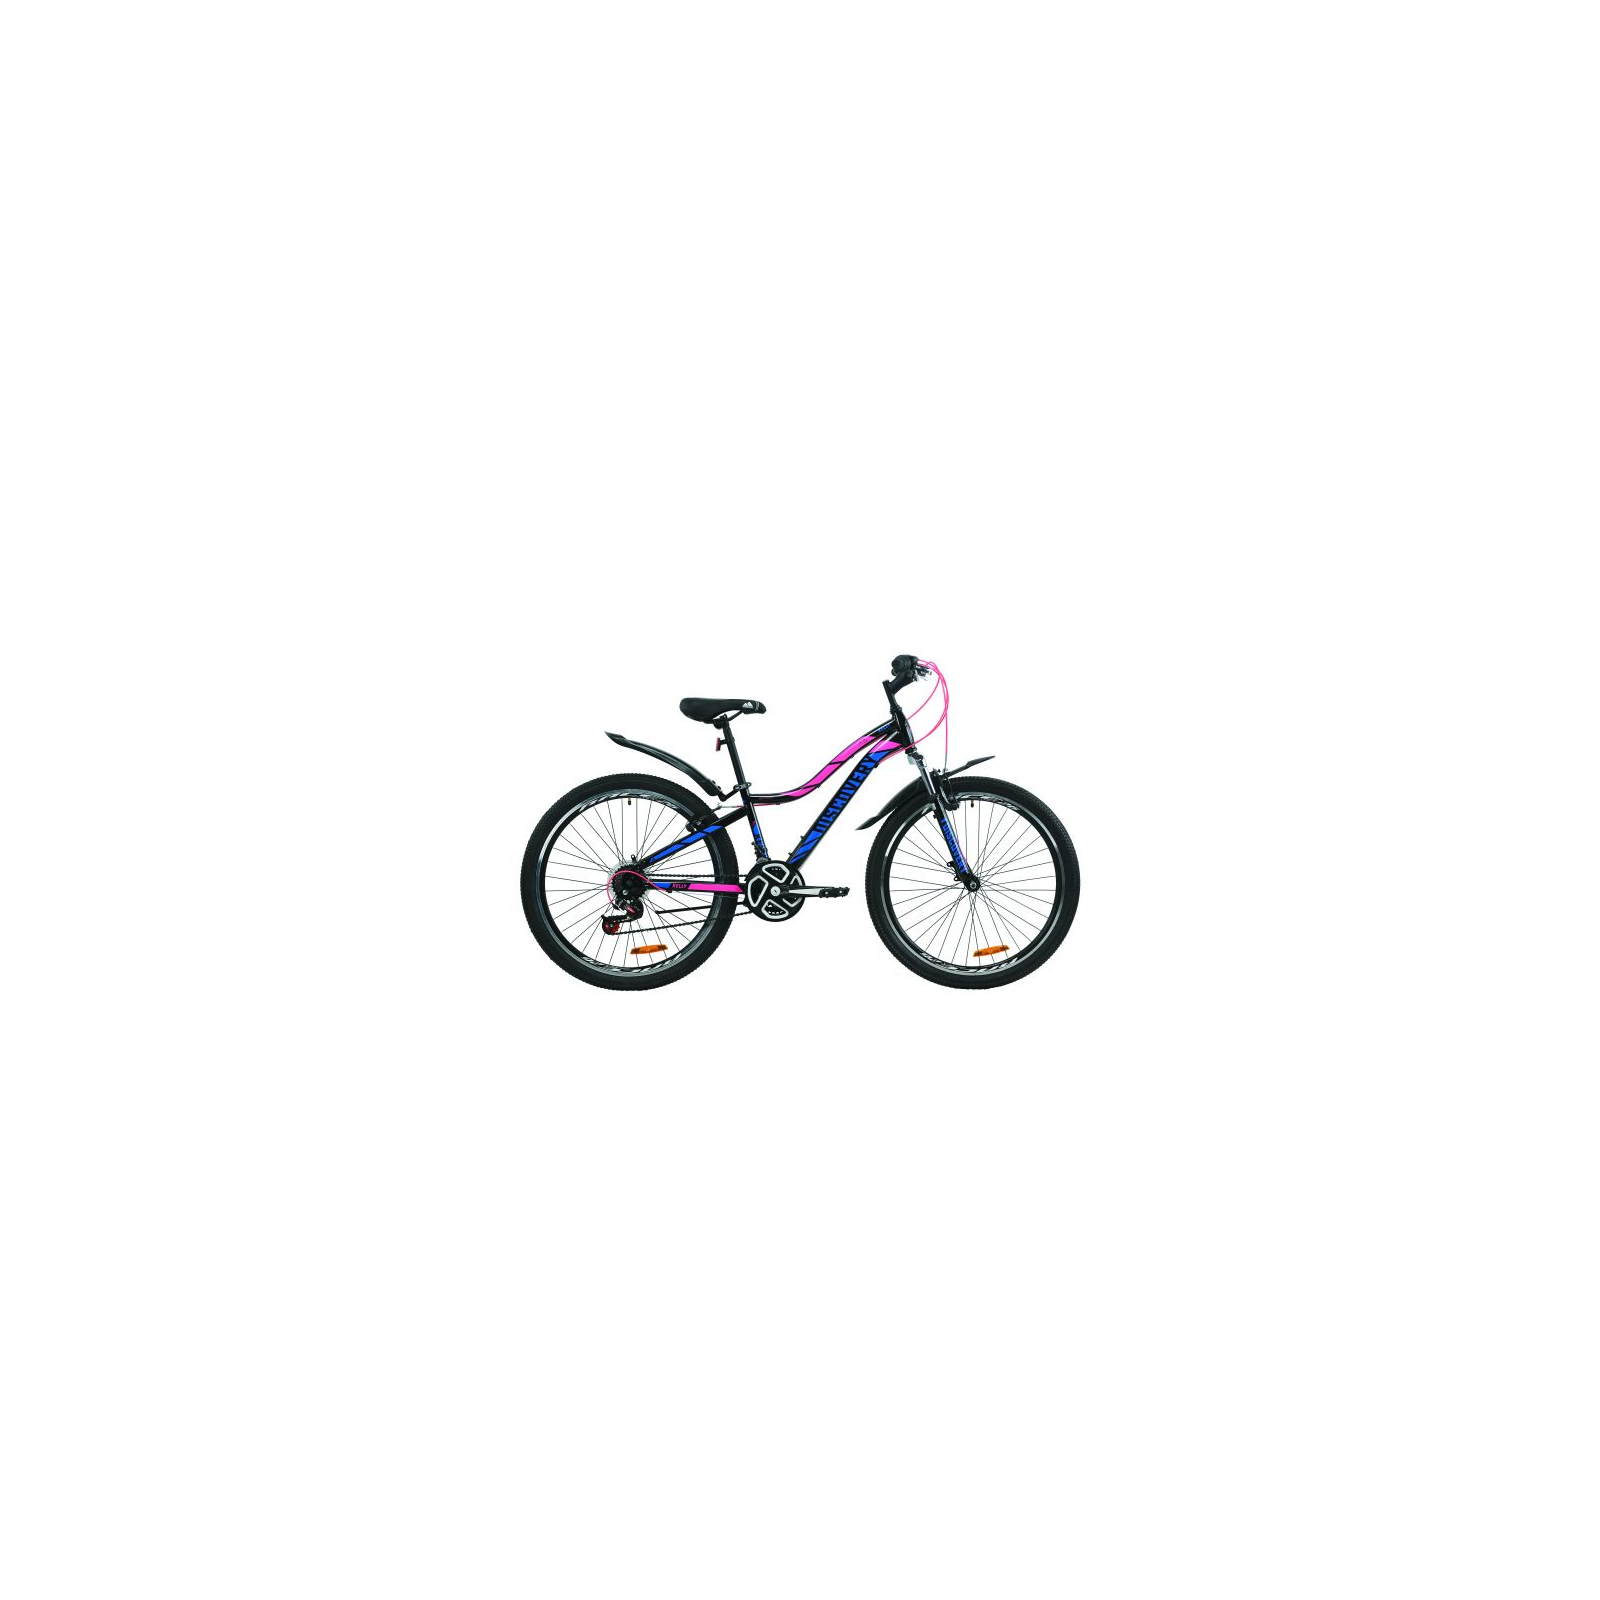 Велосипед Discovery 26" KELLY AM Vbr рама-16" St 2020 черно-малиновый с голубым (OPS-DIS-26-256)